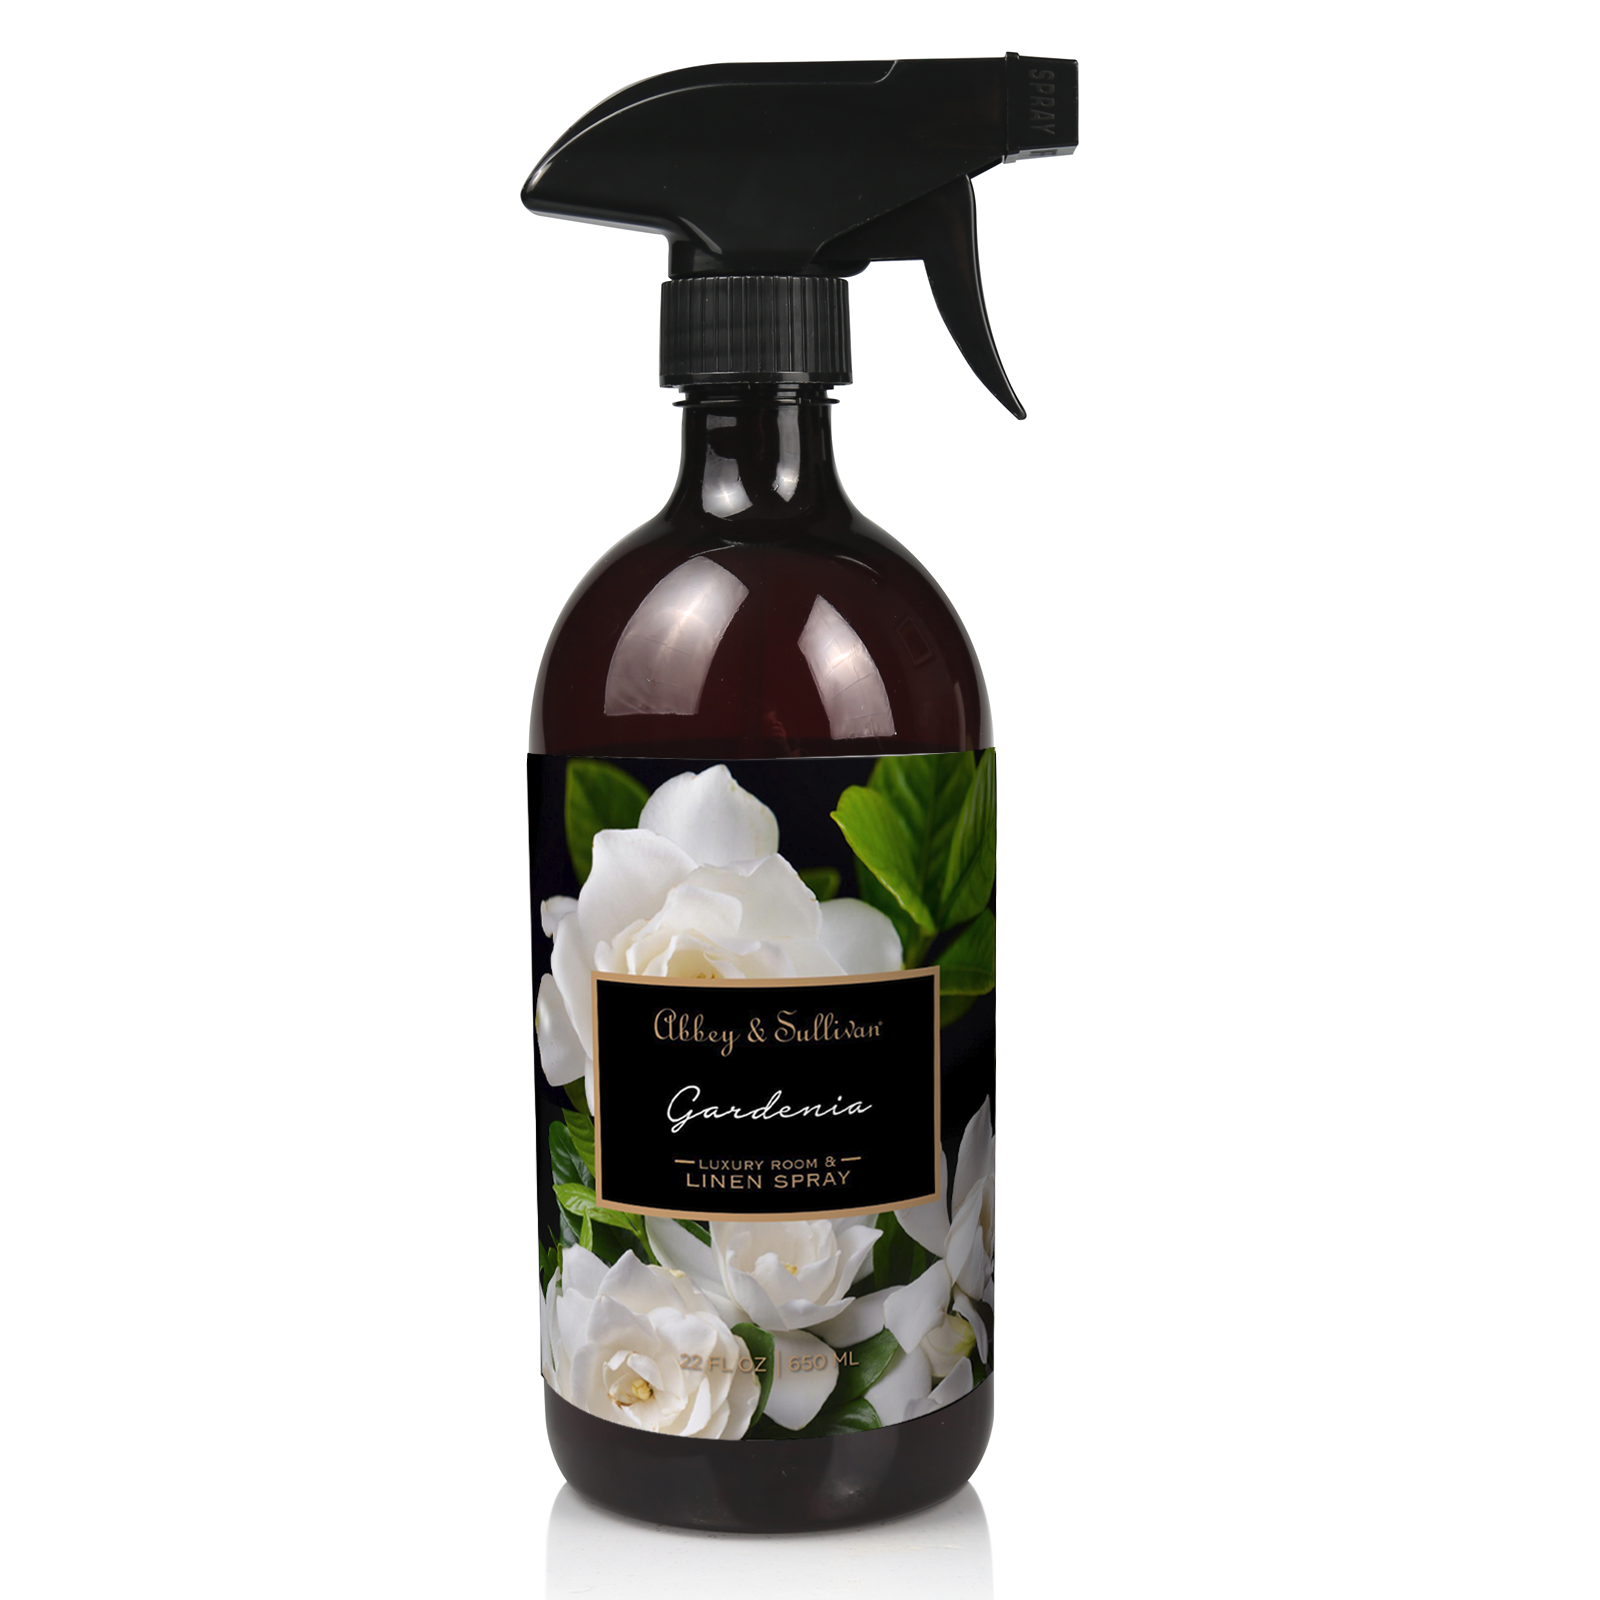 Best linen and room sprays - Gardenia